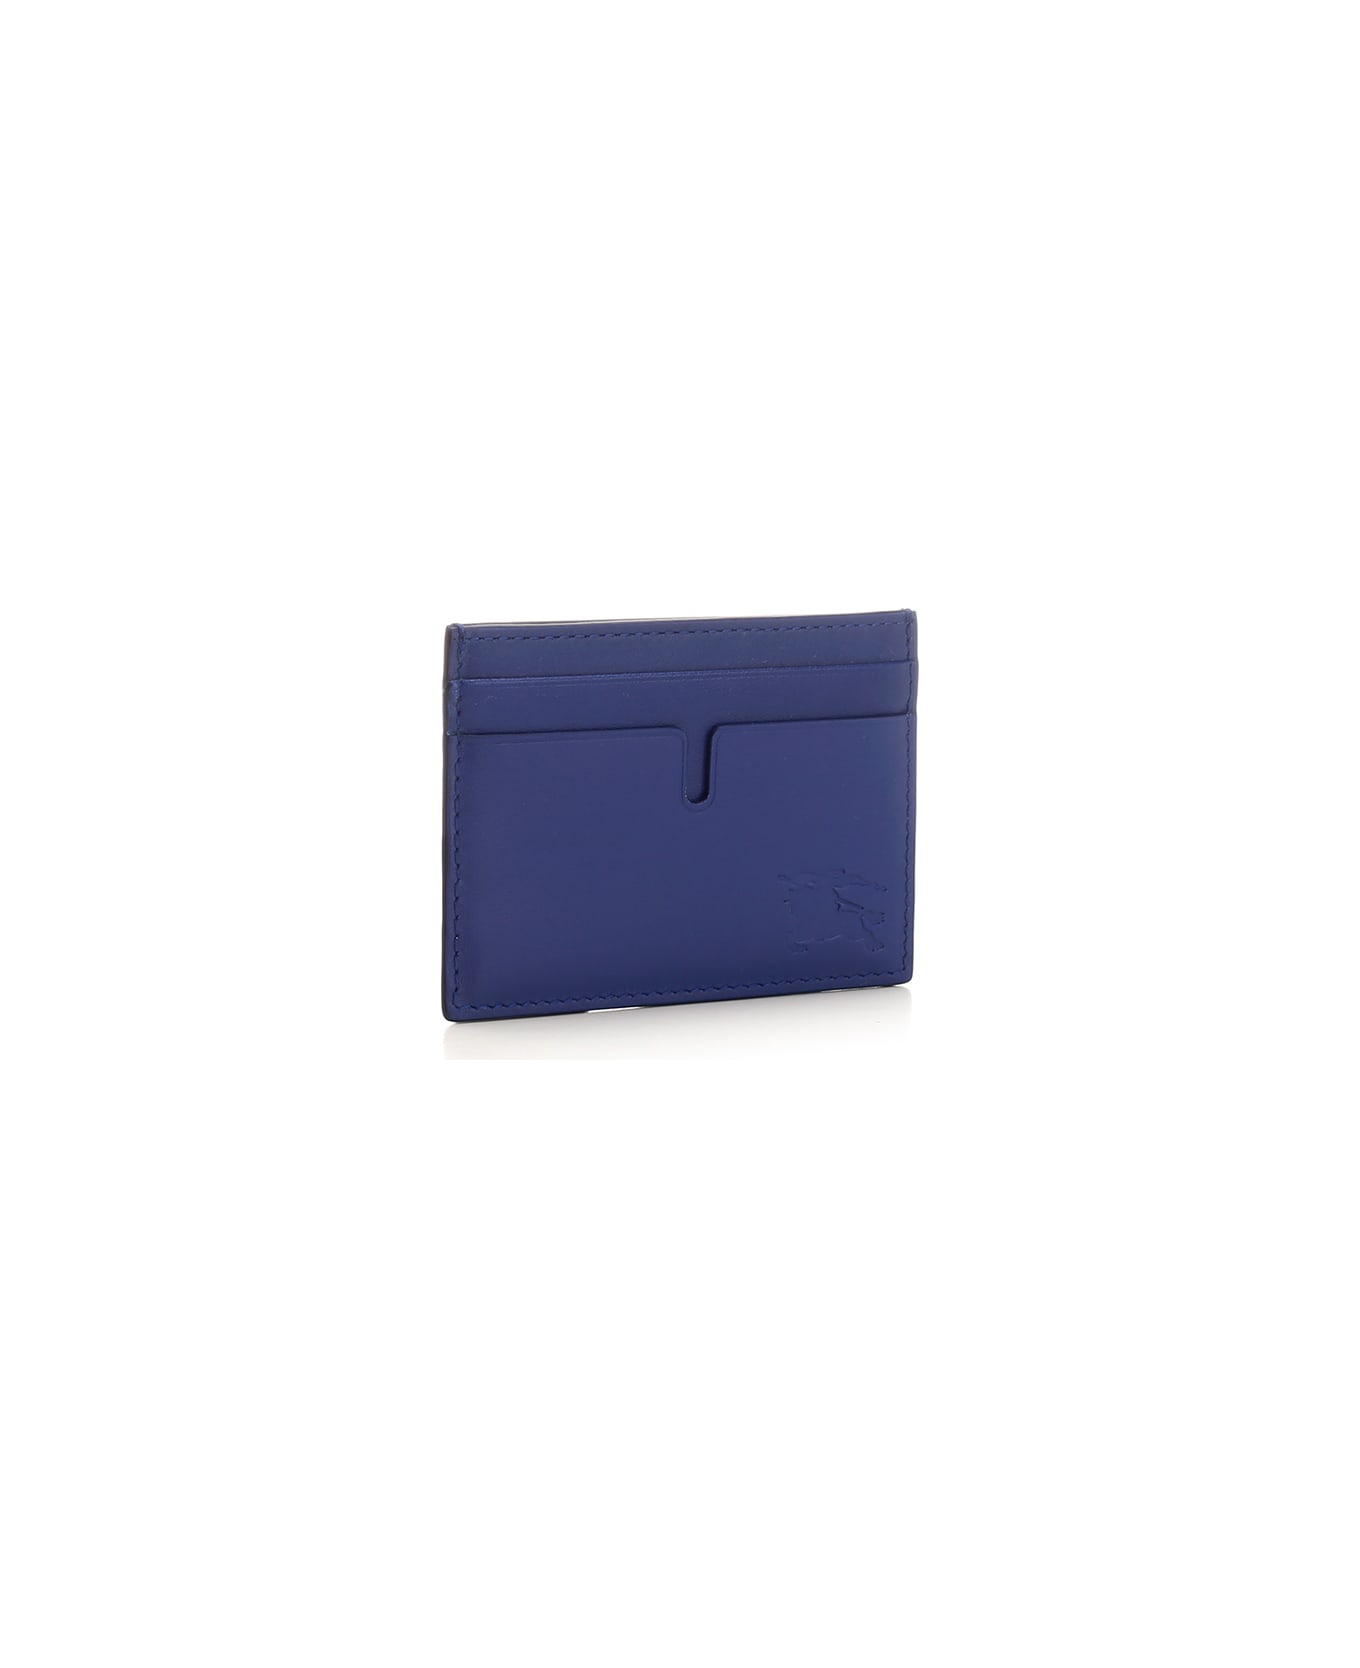 Burberry 5 Slots Card Case - Blue